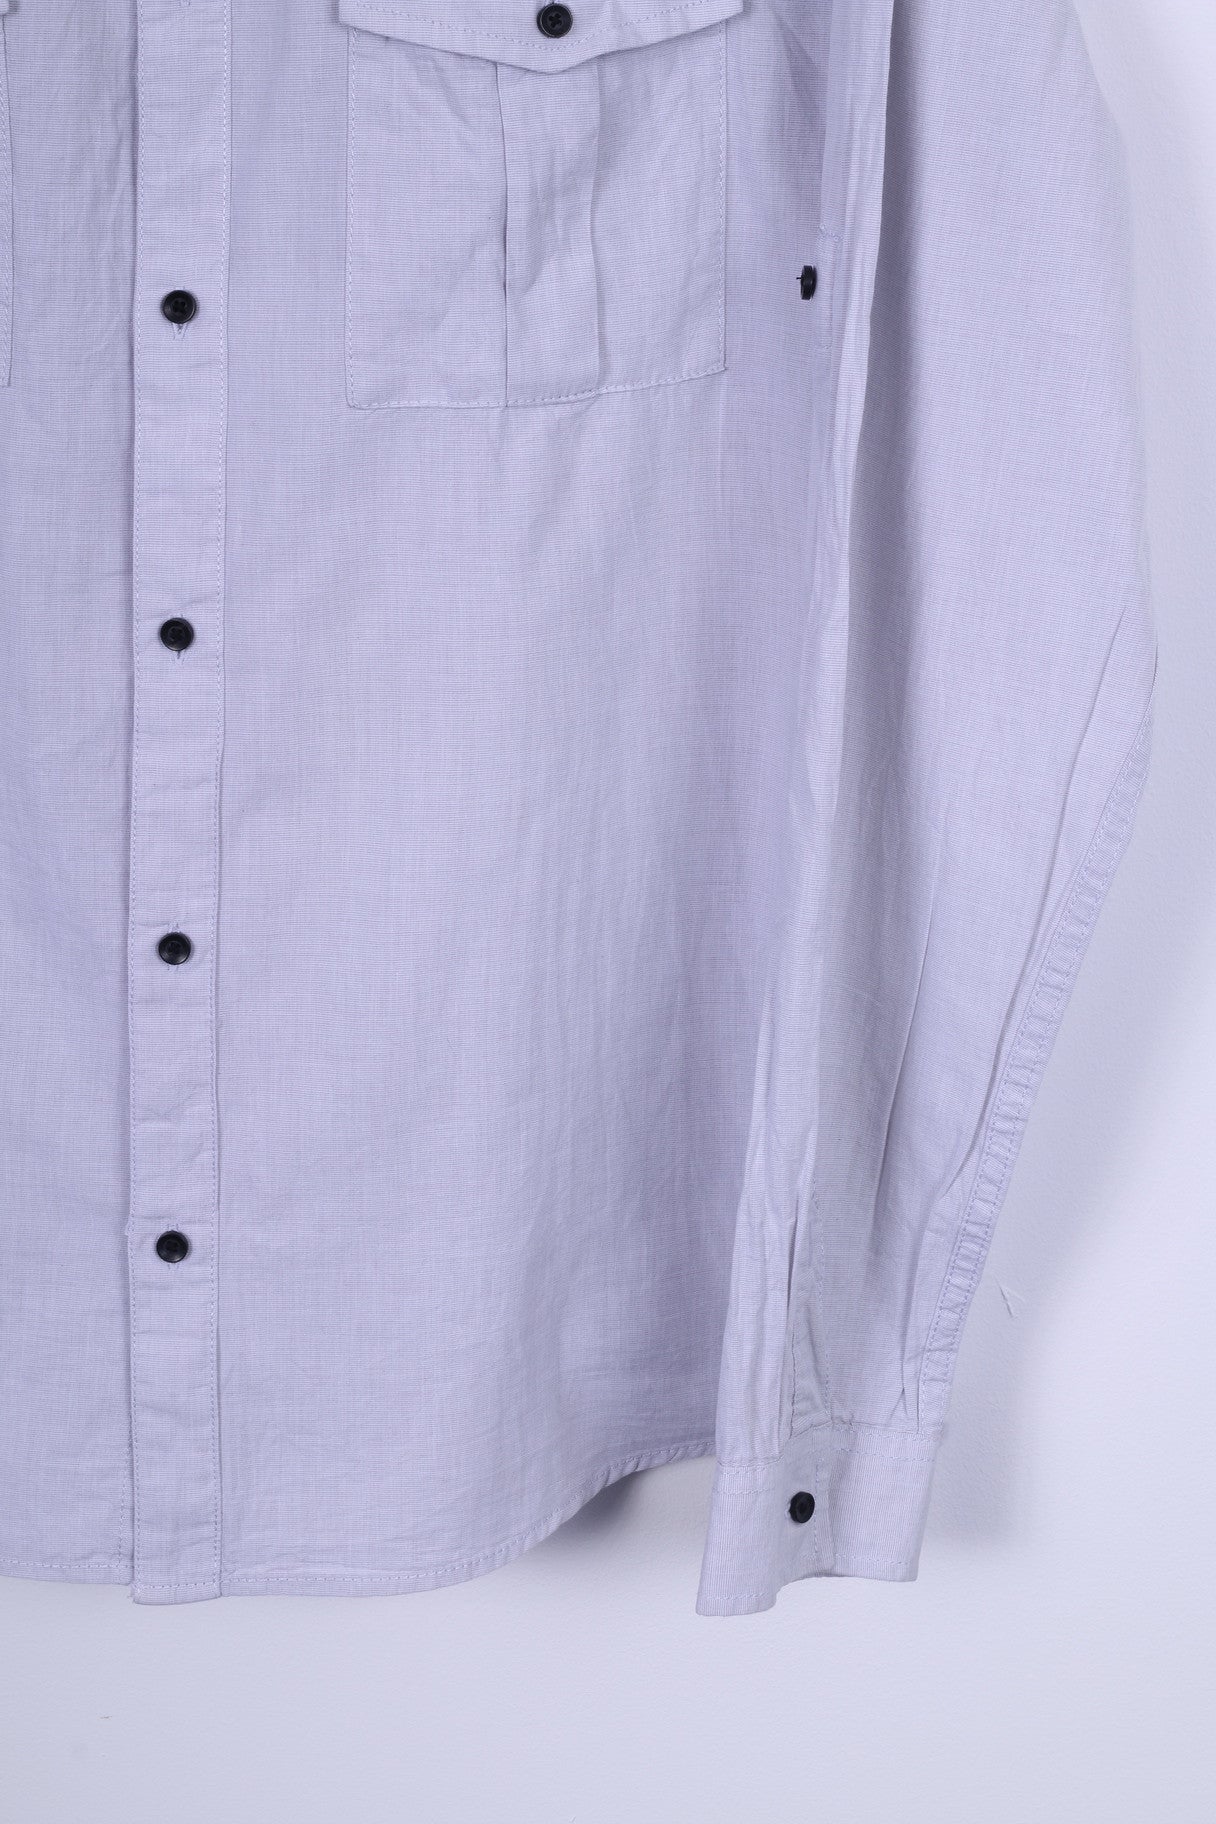 H&M Mens XL Casual Shirt Long Sleeve Cotton Standard Collar